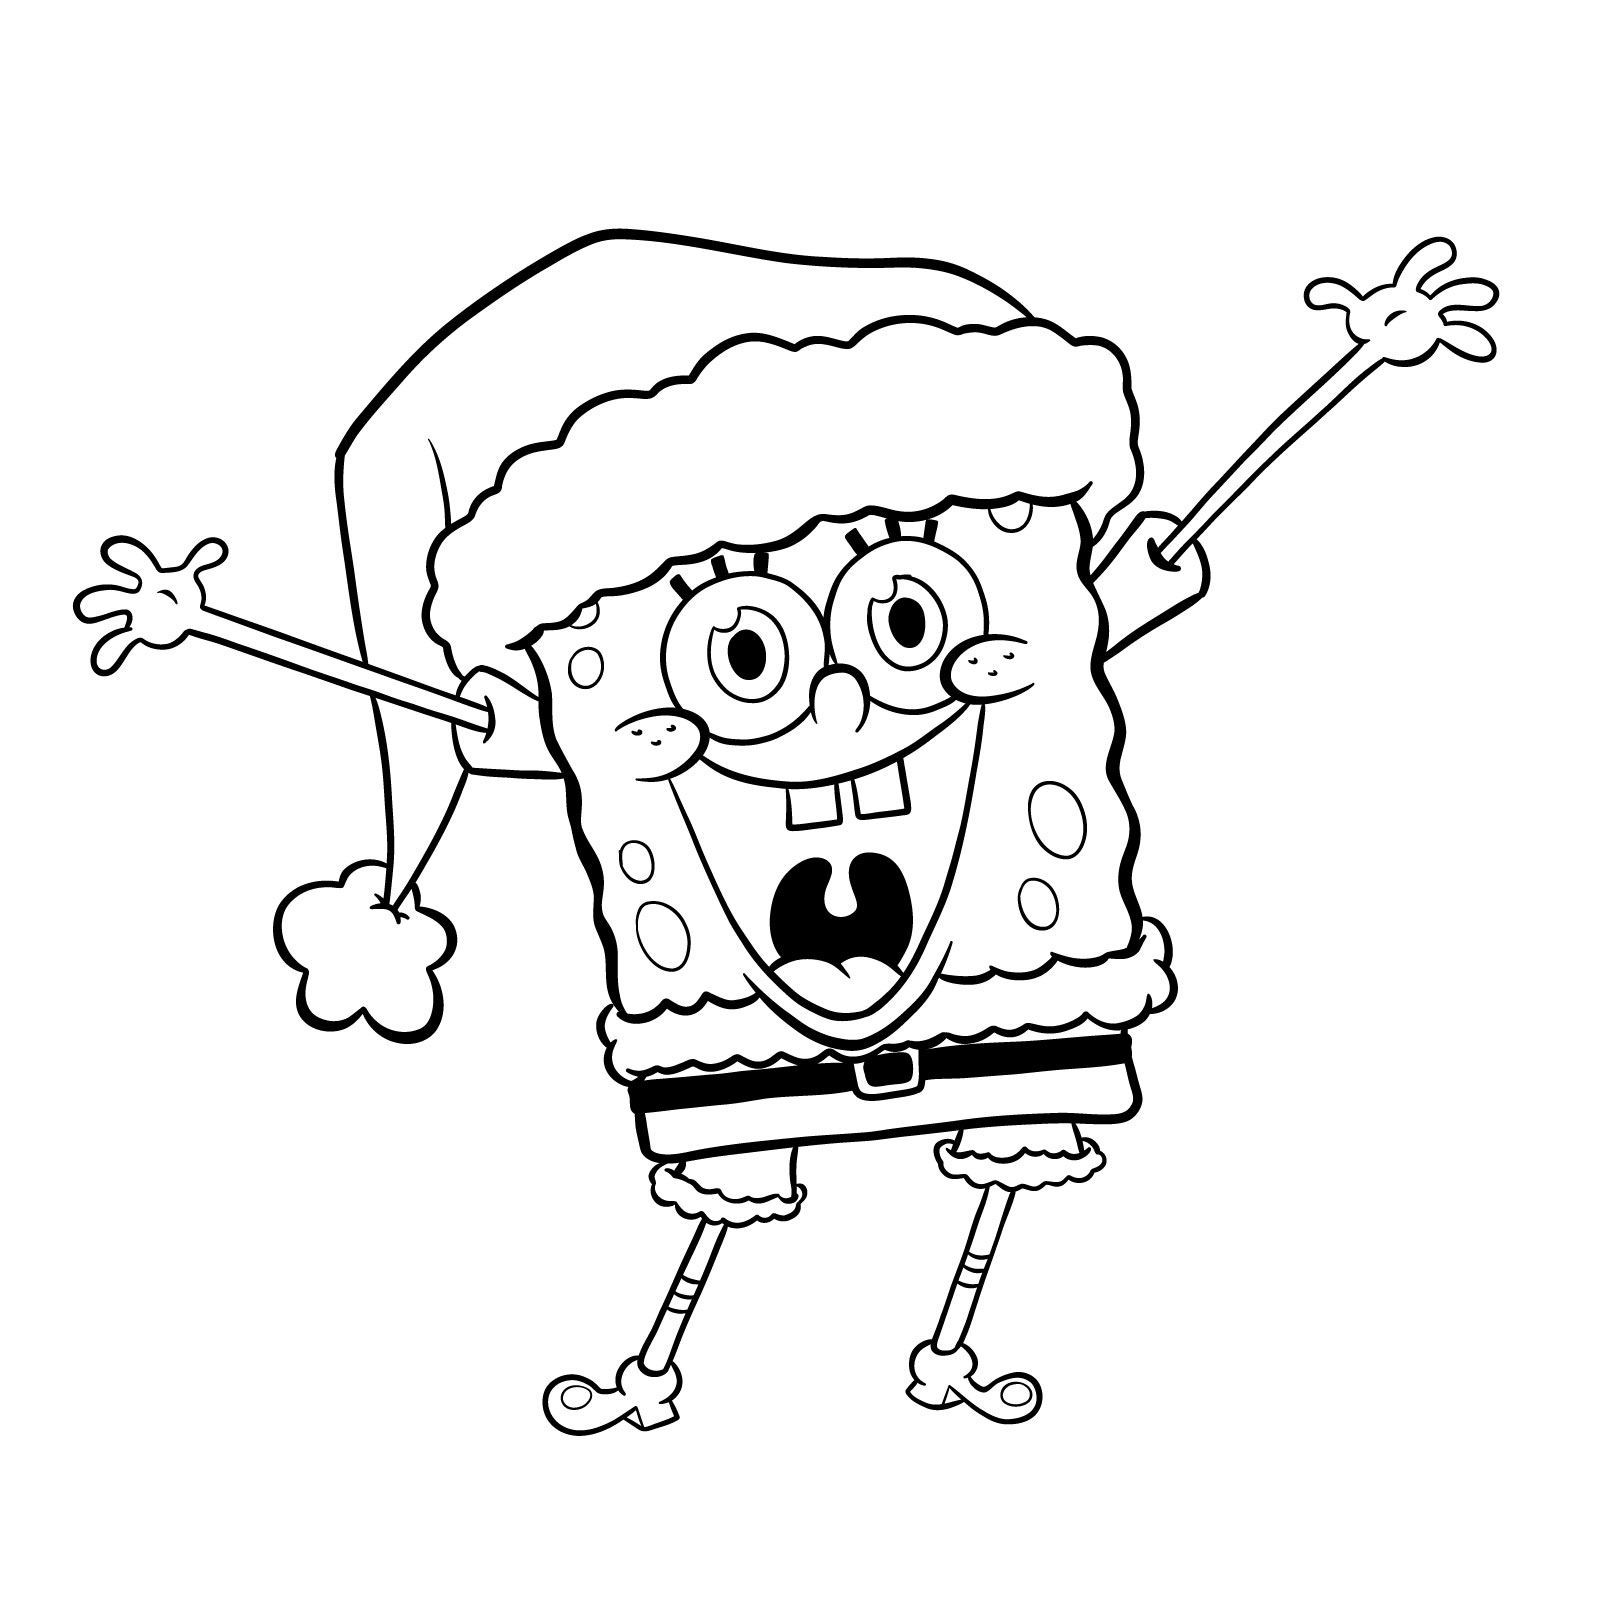 How to draw Santa SpongeBob SquarePants - step 27